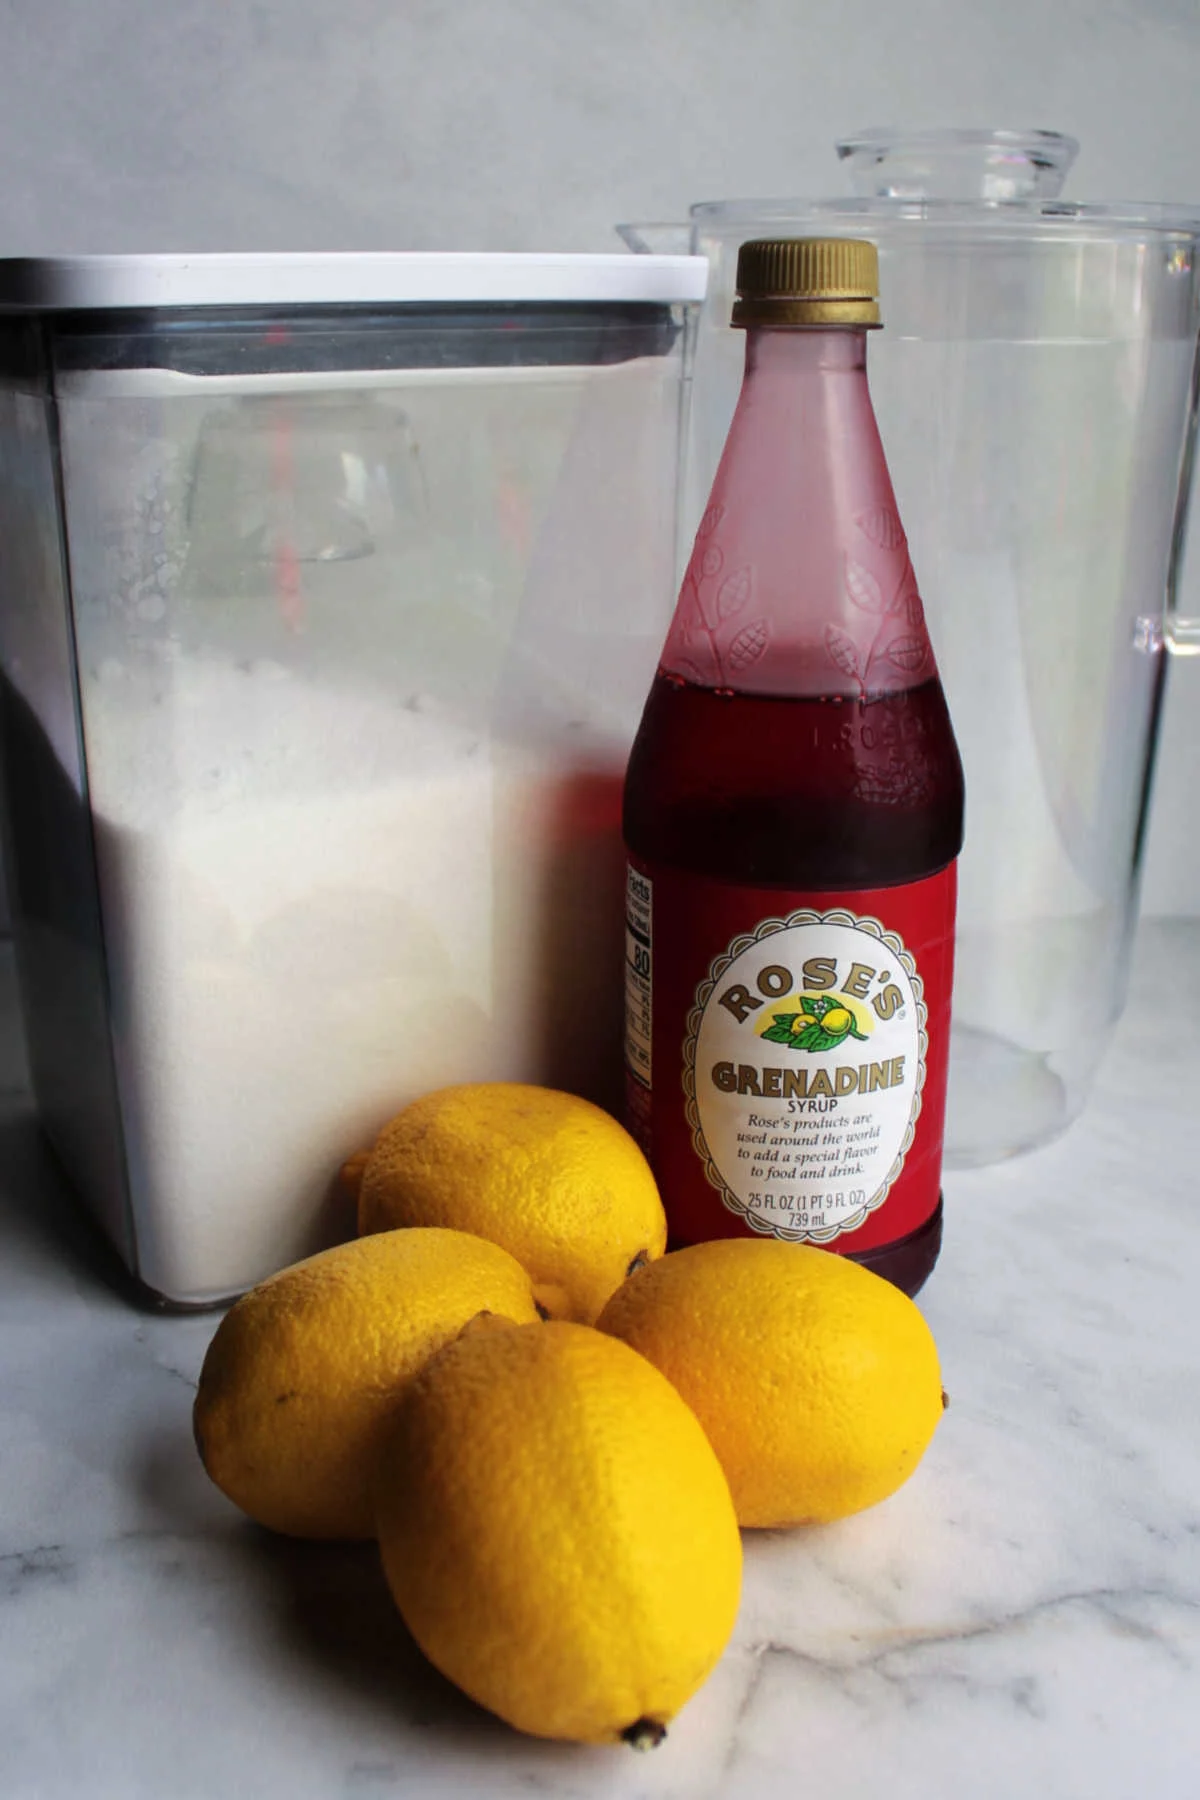 Ingredients for making homemade pink lemonade.